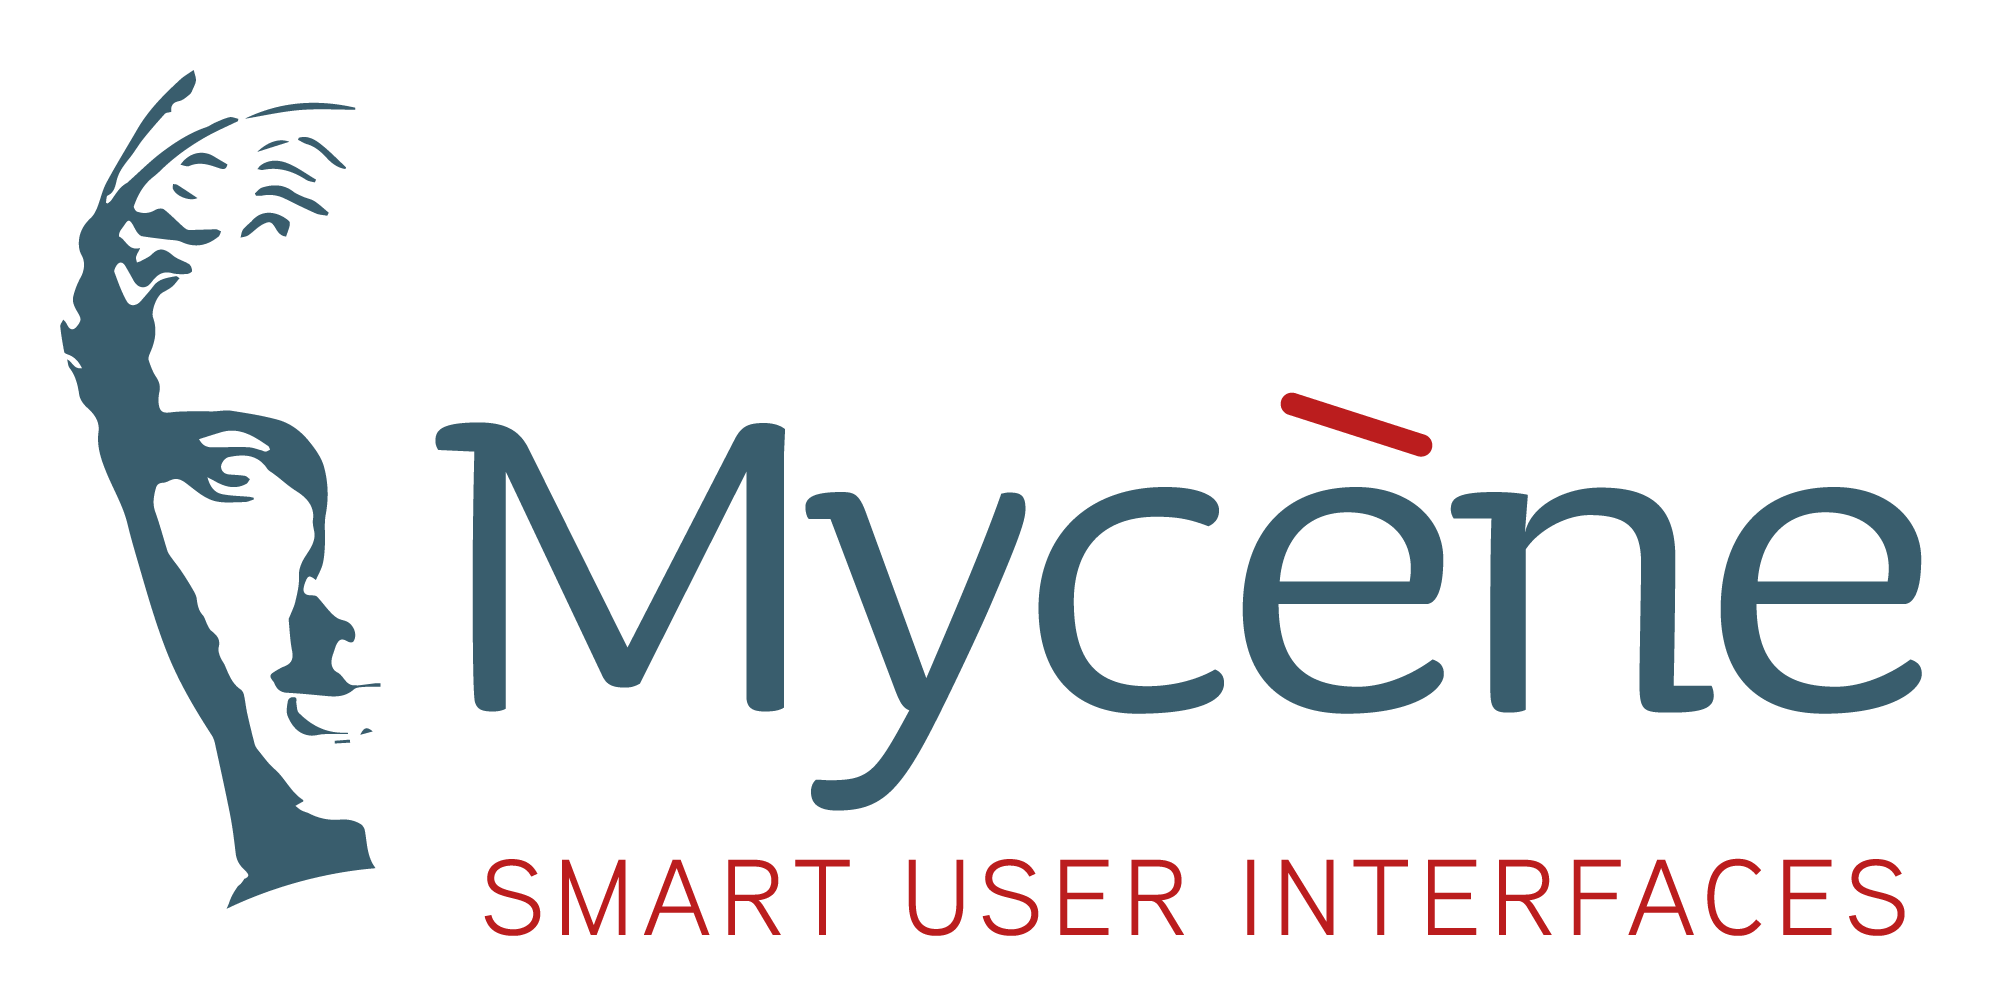 Mycène Logo